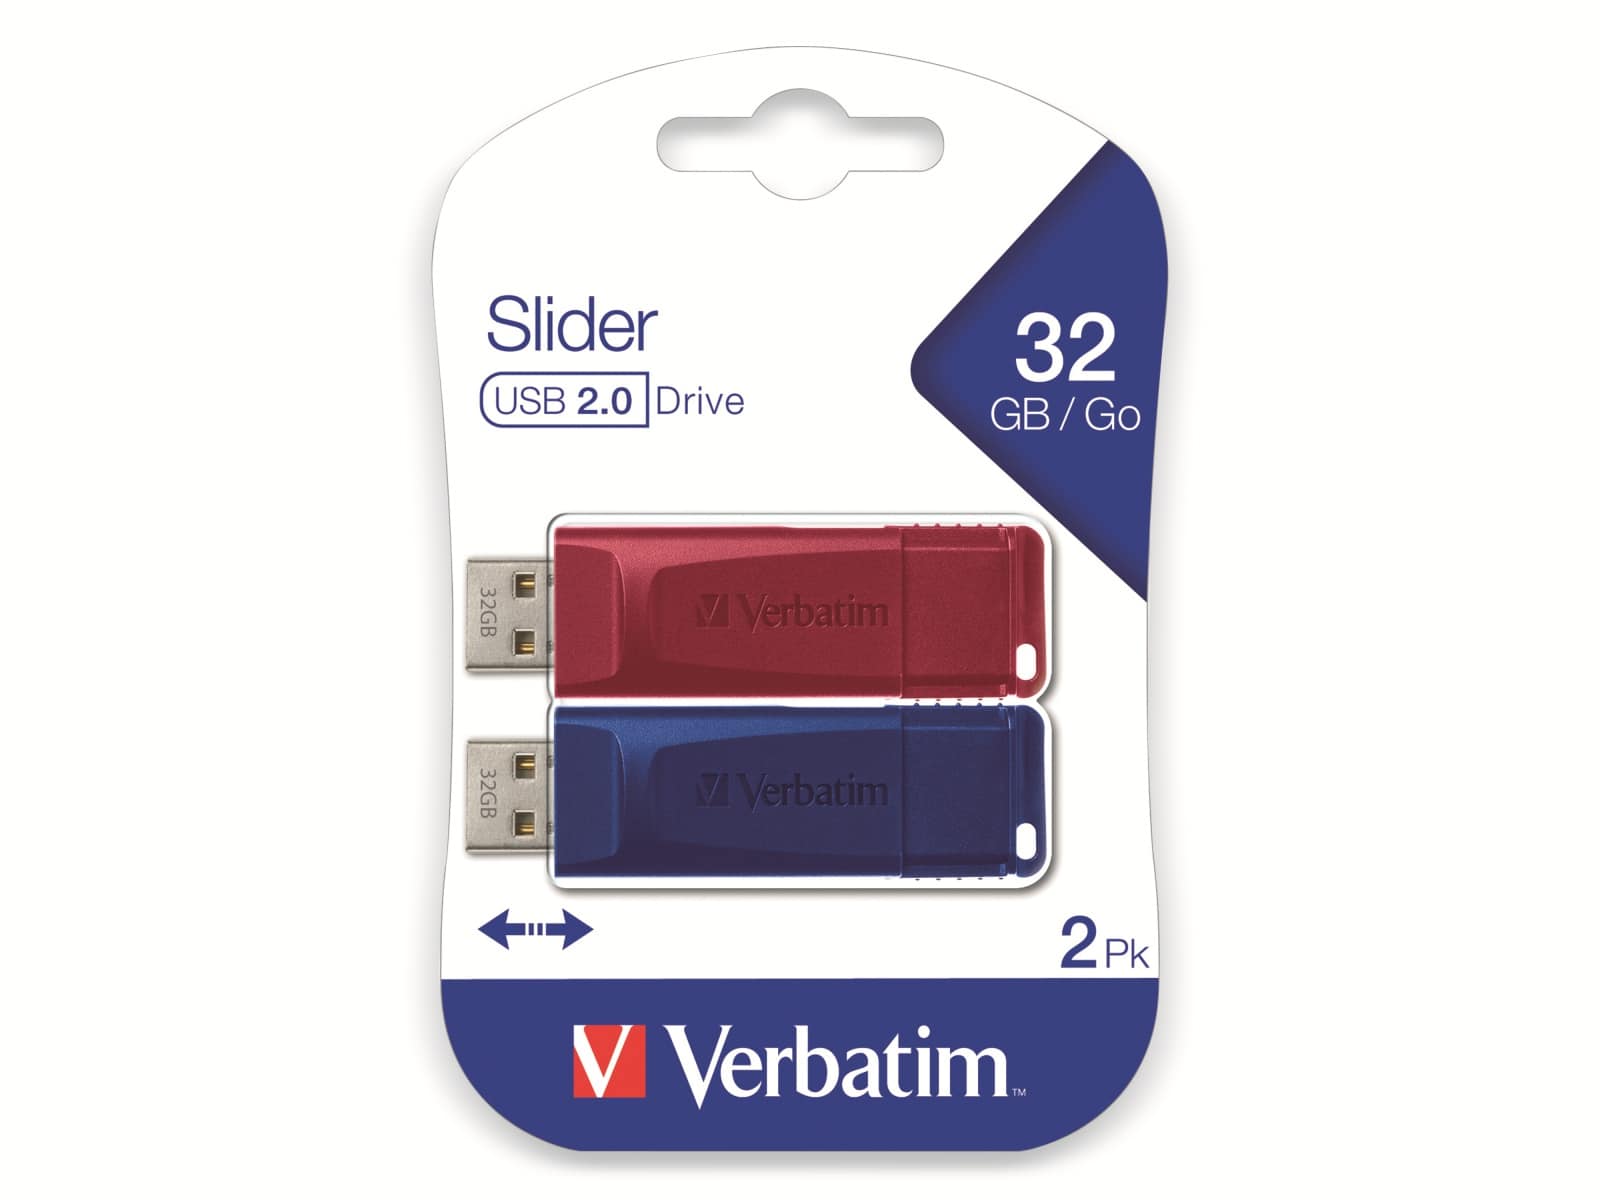 VERBATIM USB-Stick Slider, 32 GB, 2er Pack